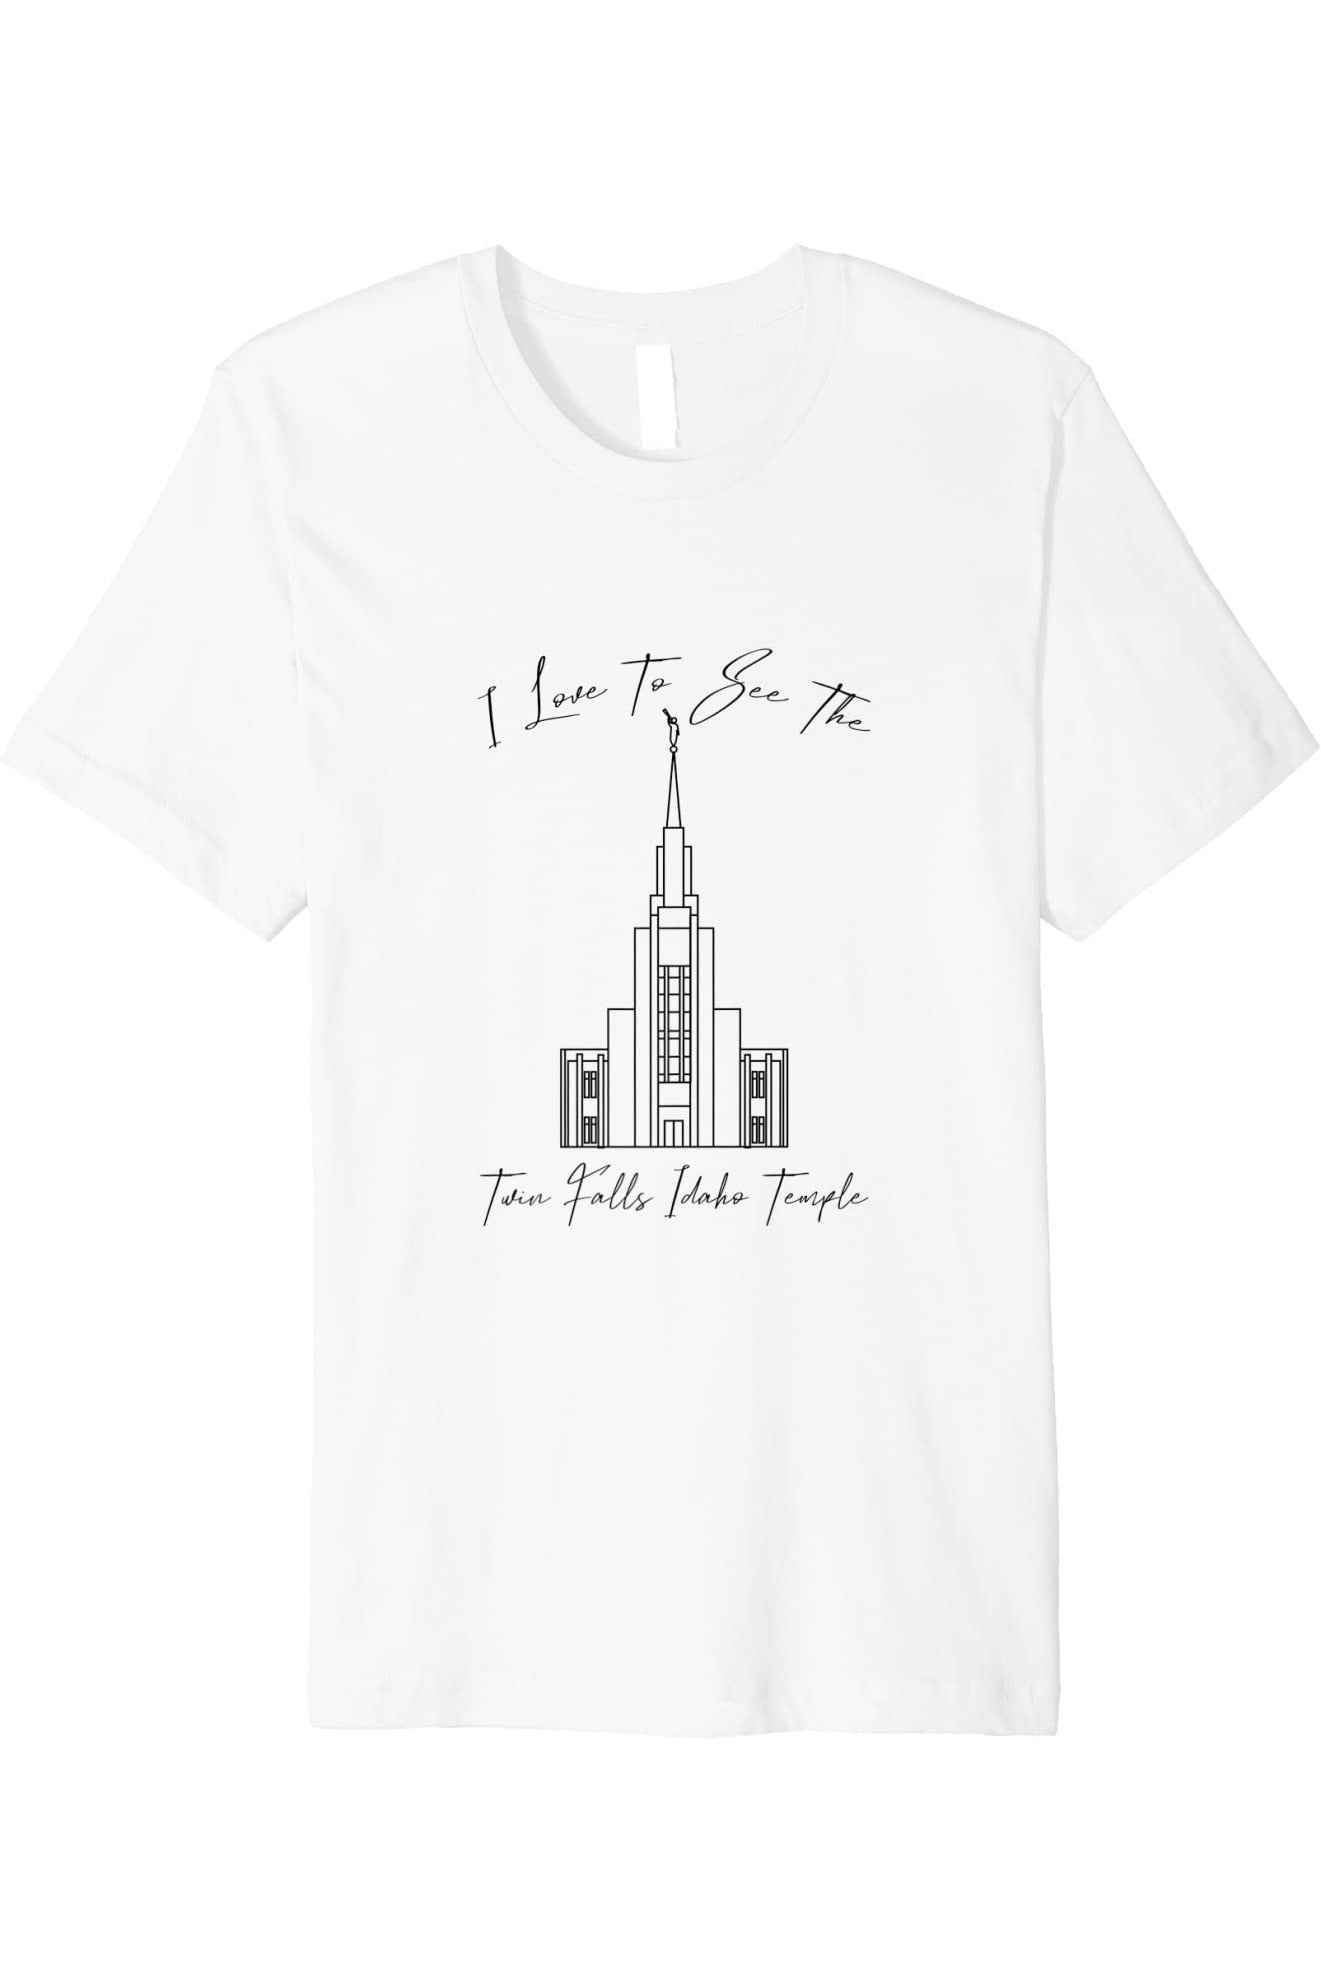 Twin Falls Idaho Temple T-Shirt - Premium - Calligraphy Style (English) US